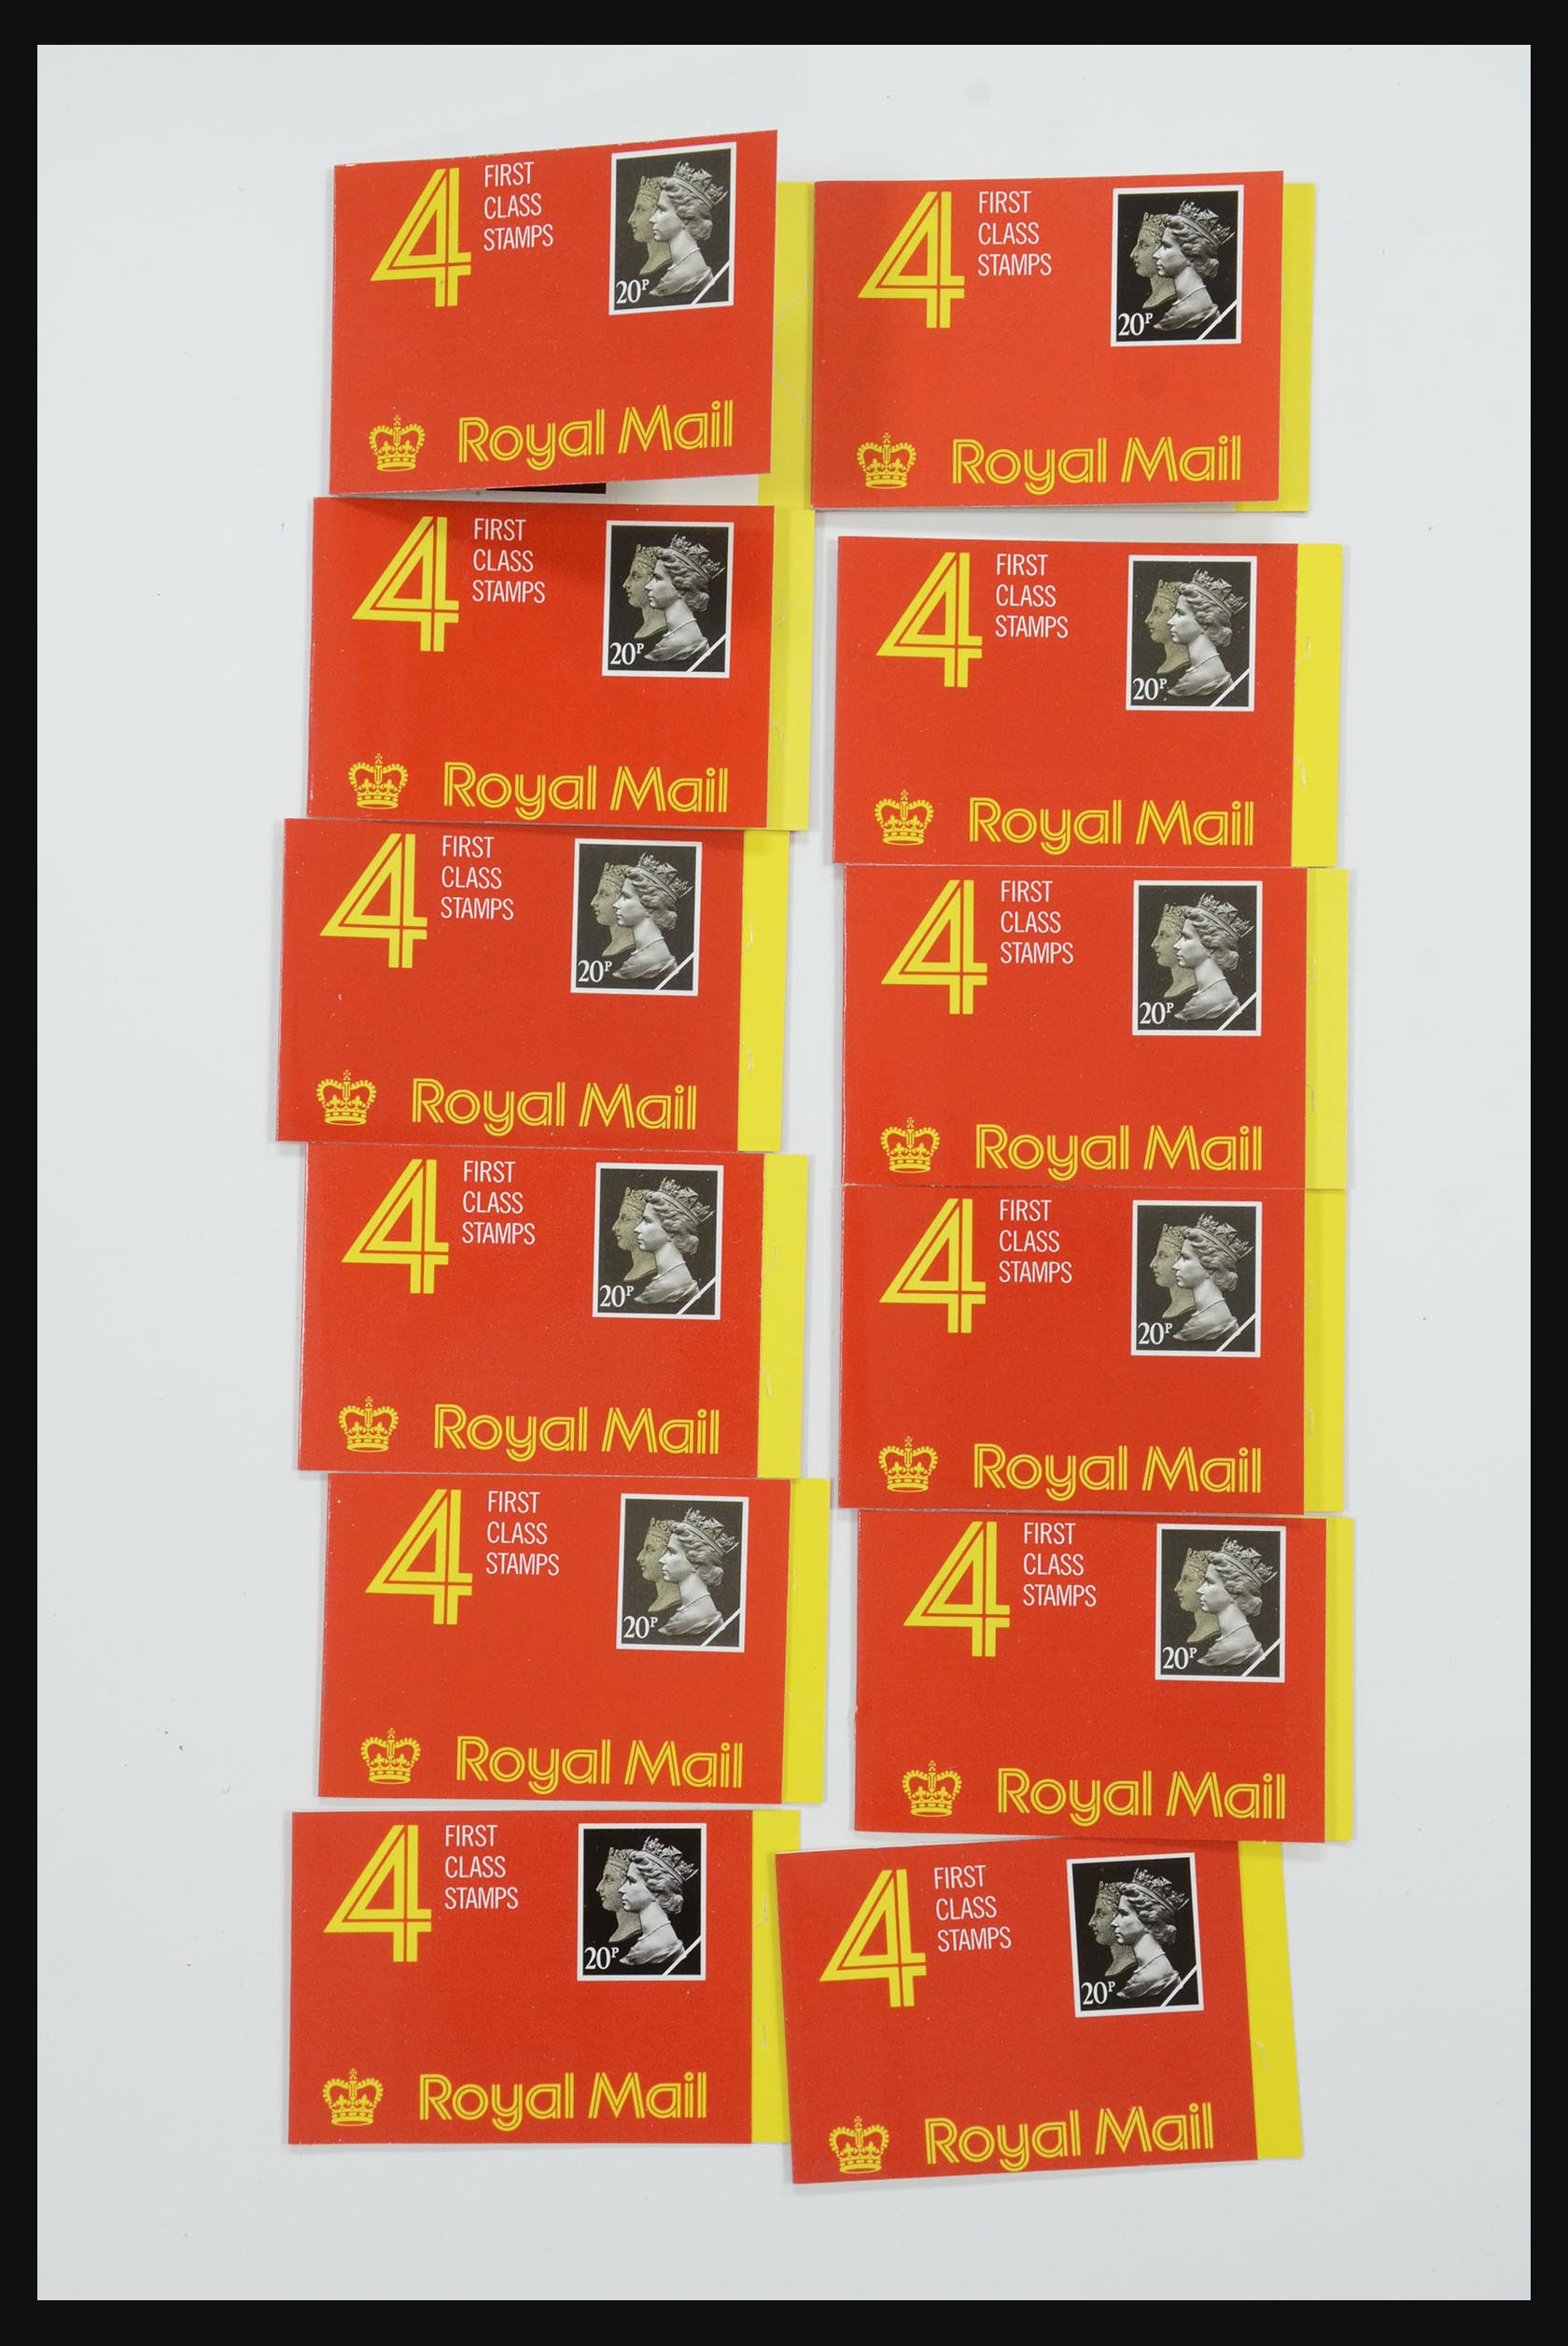 31961 036 - 31961 Great Britain stampbooklets 1971-1999.